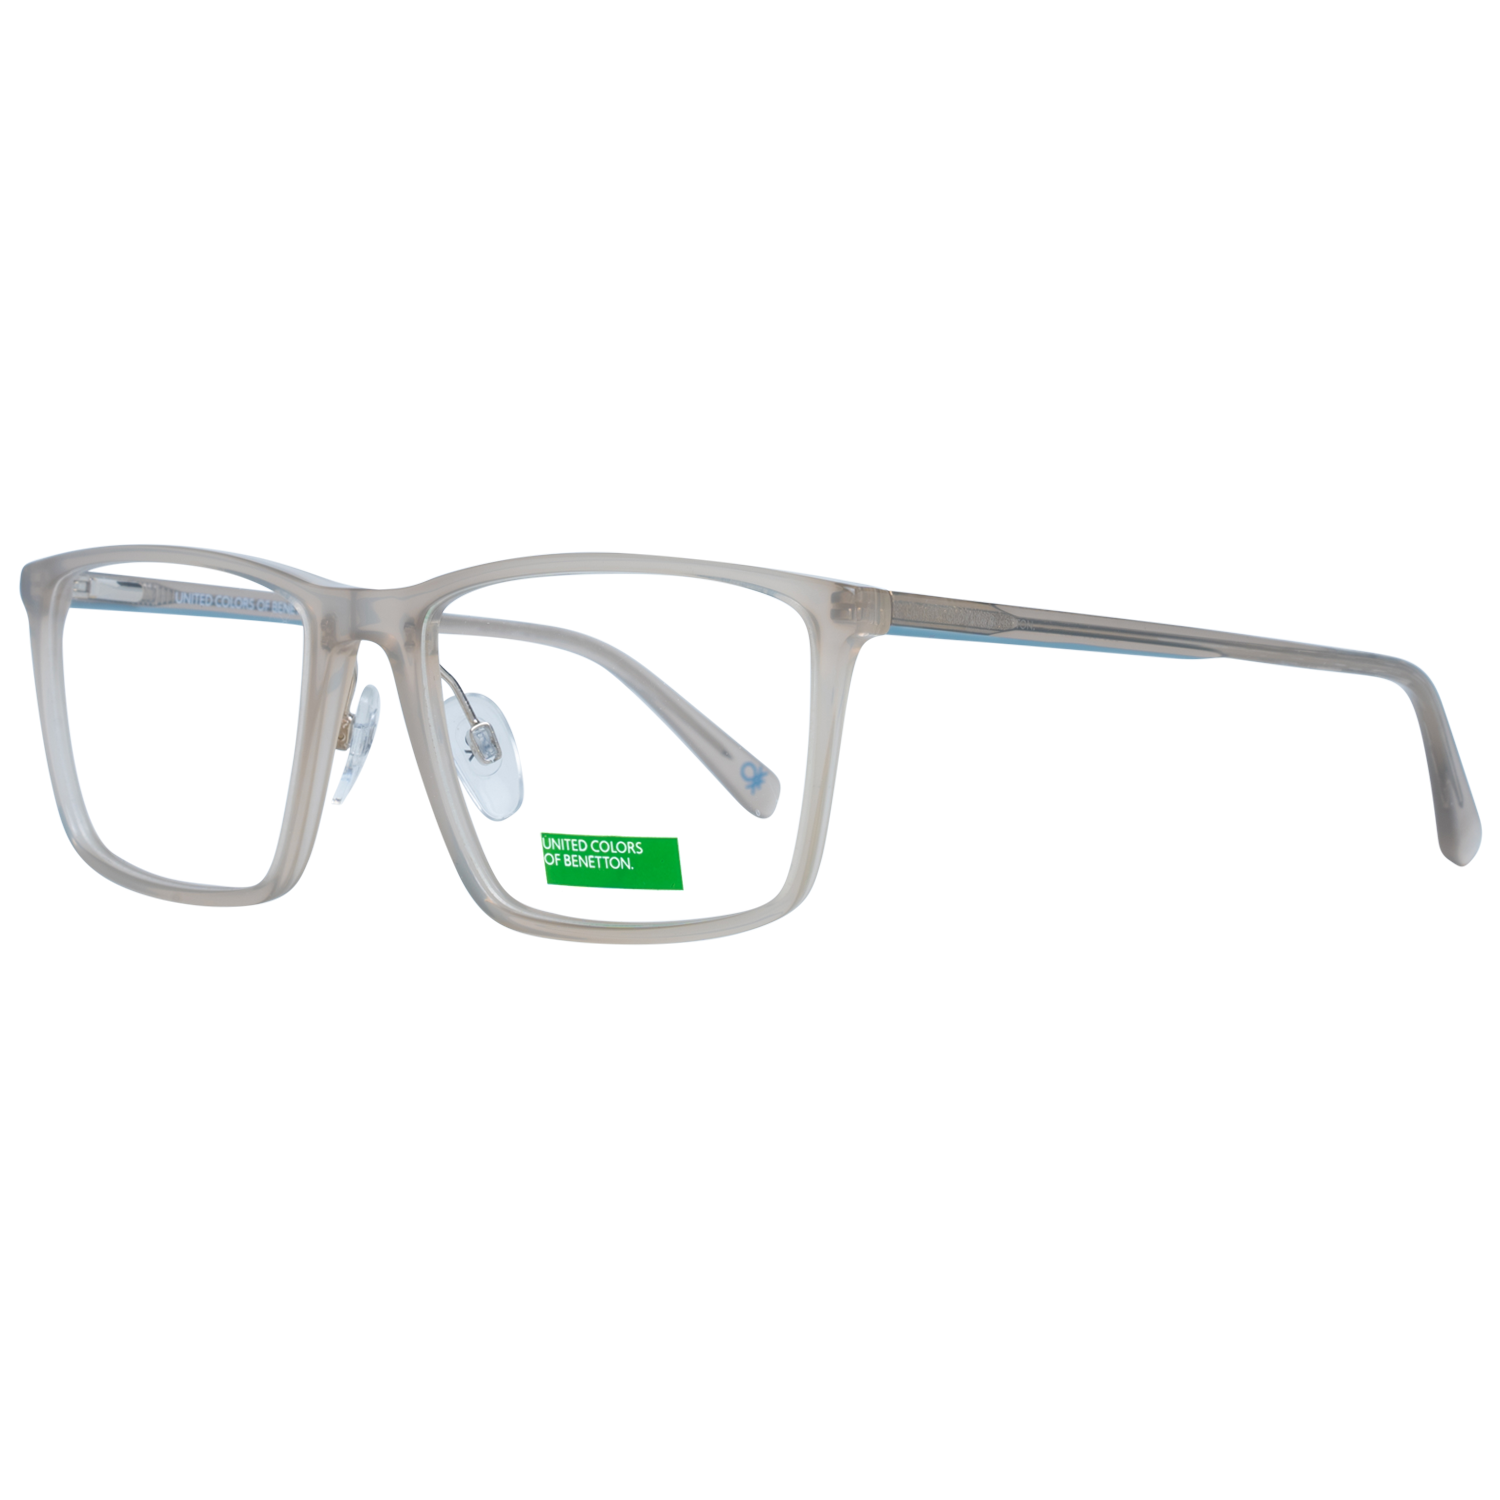 Benetton Frames Benetton Optical Frame BEO1001 917 54 Eyeglasses Eyewear UK USA Australia 